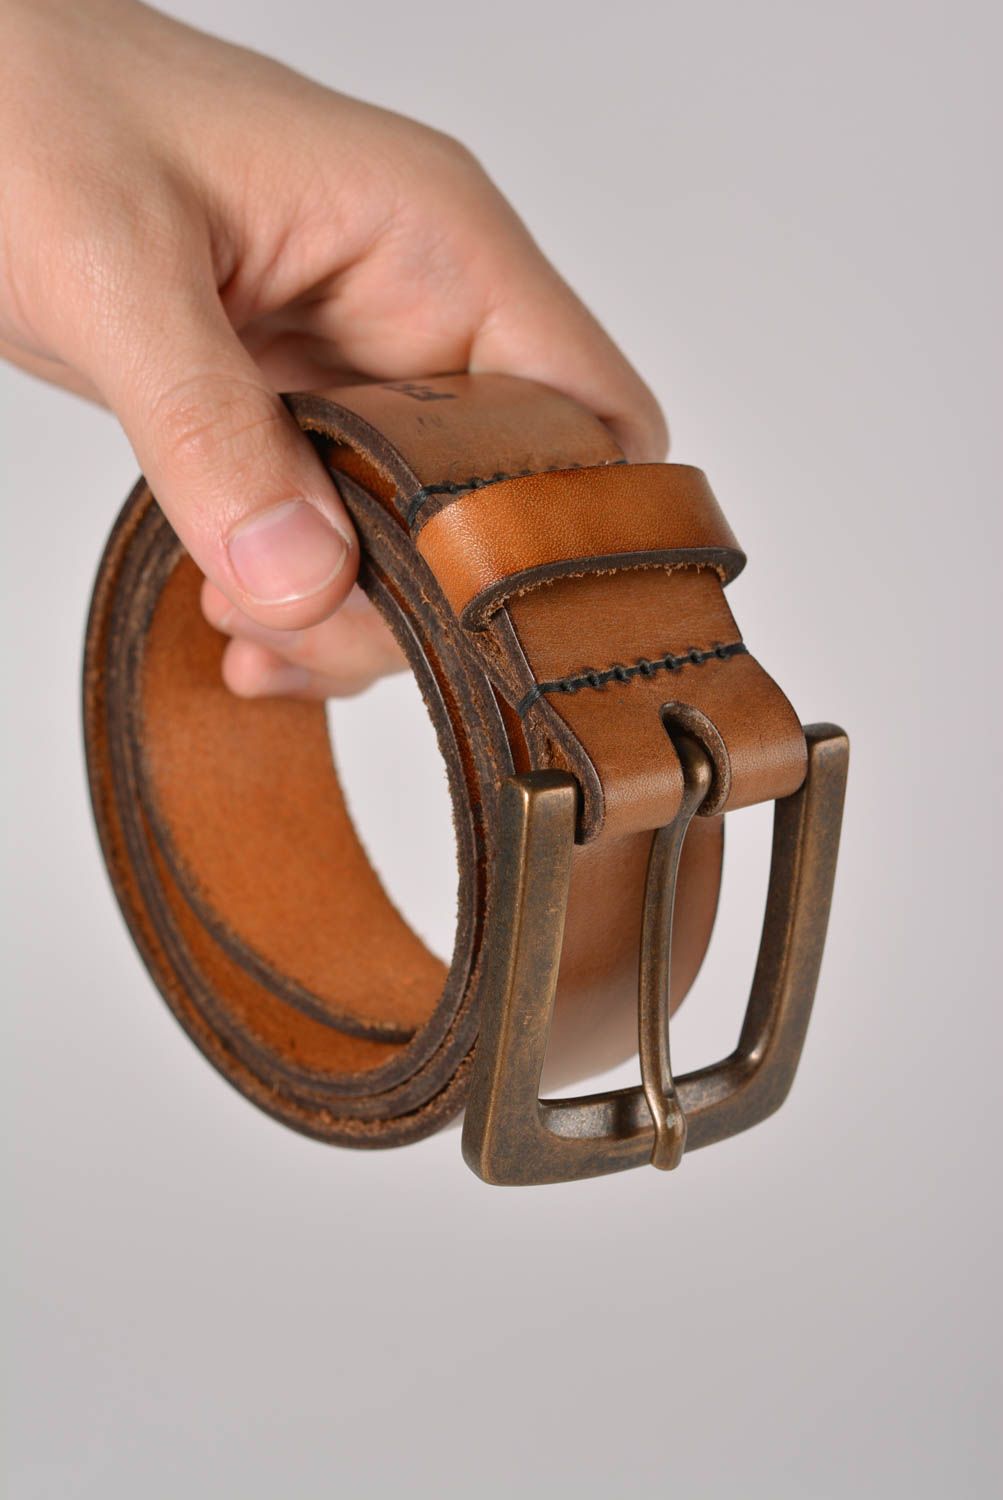 Mens belt handmade leather goods accessories for men designer belts gift for him photo 3